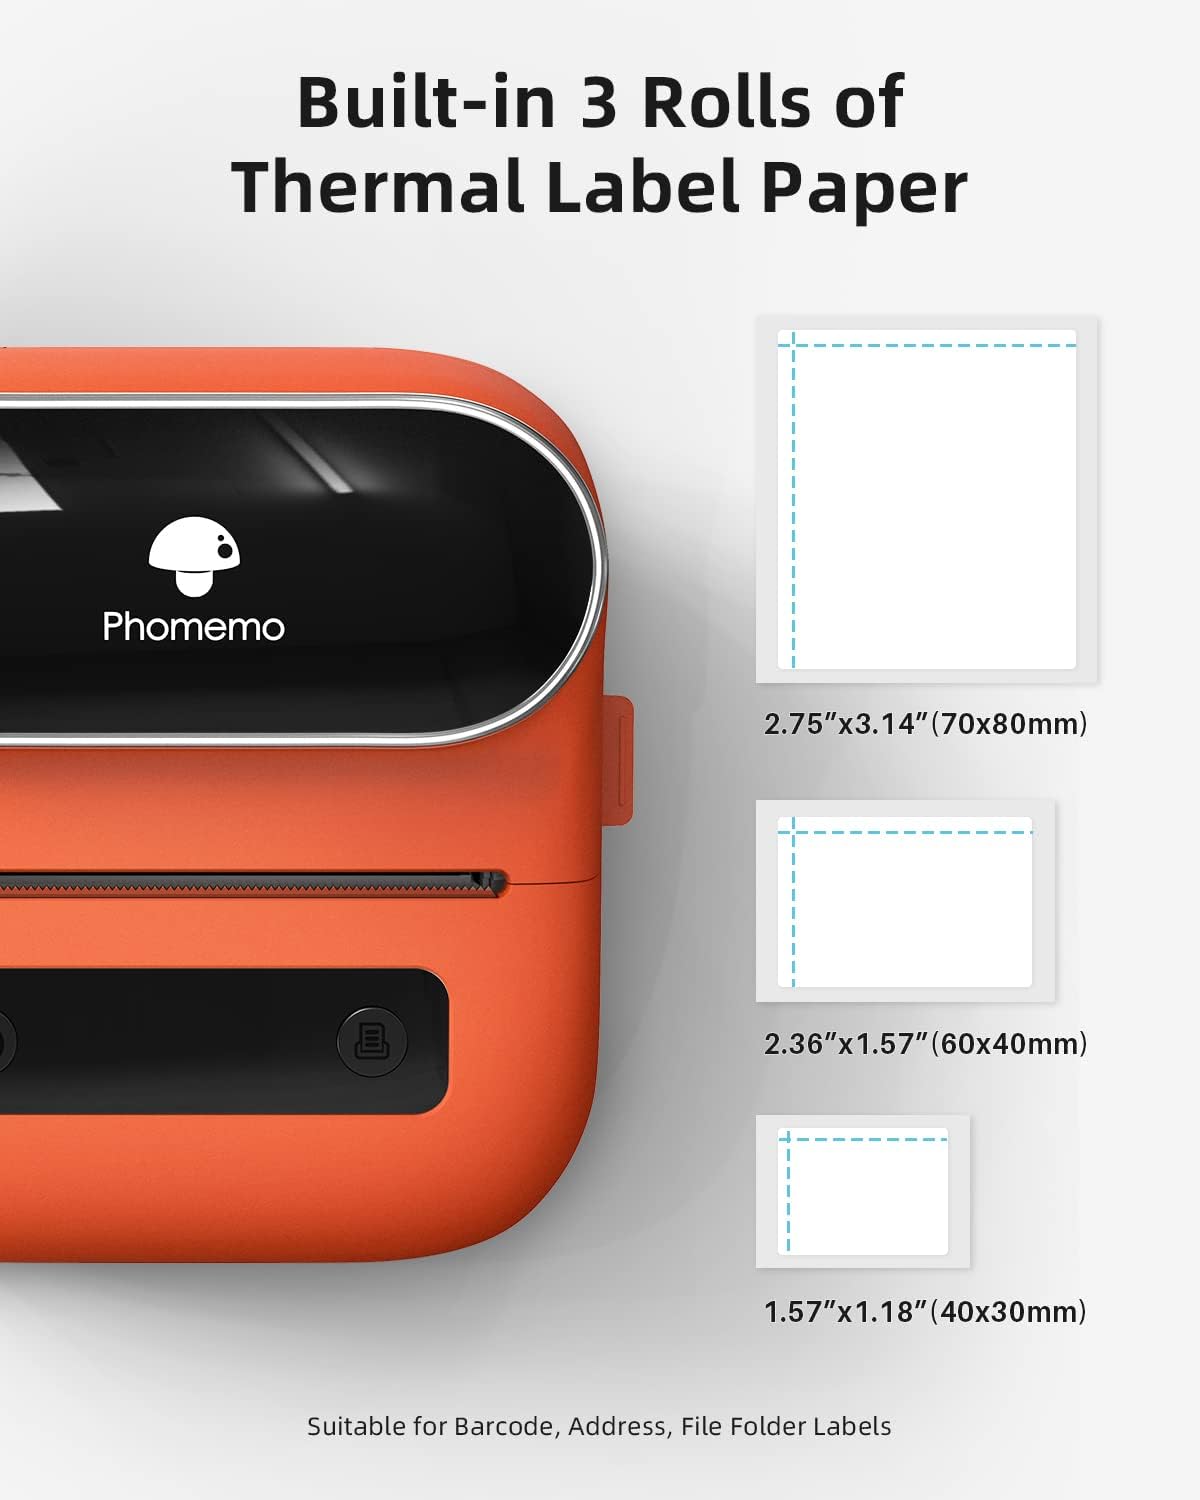 Phomemo M220 Printer Label Maker 3 Inch / Orange